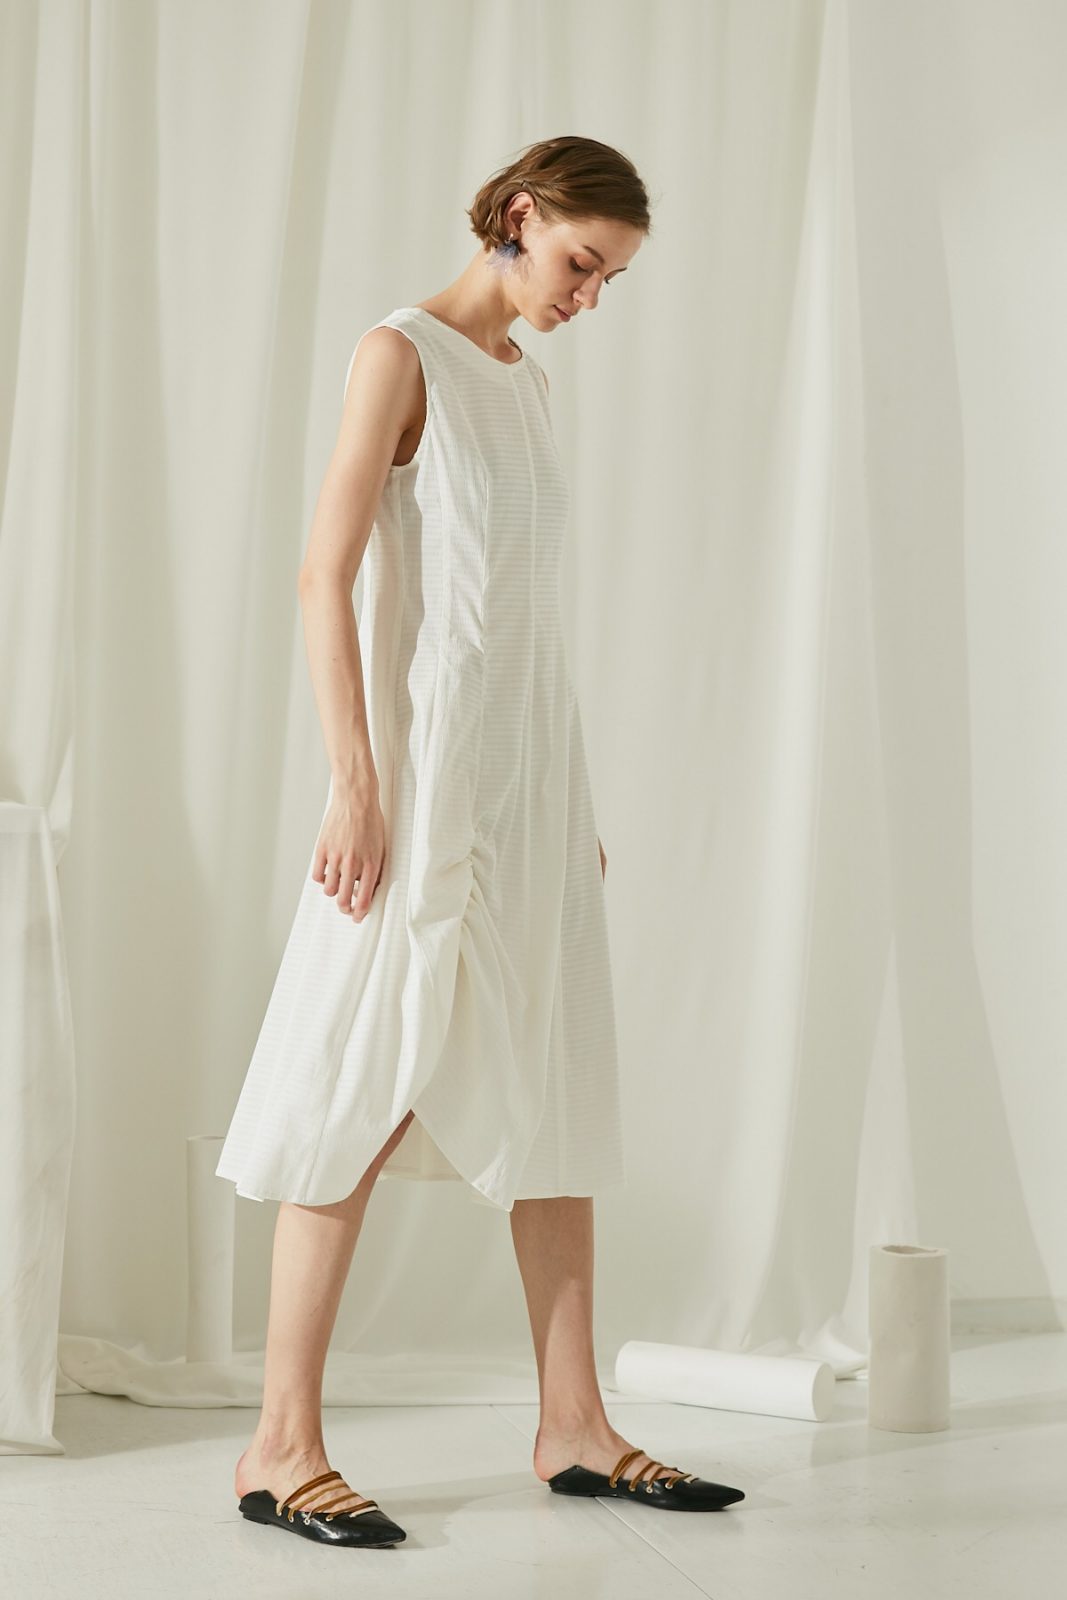 SKYE San Francisco SF ethical modern minimalist quality women clothing fashion Juliette Drawstring Dress white 6